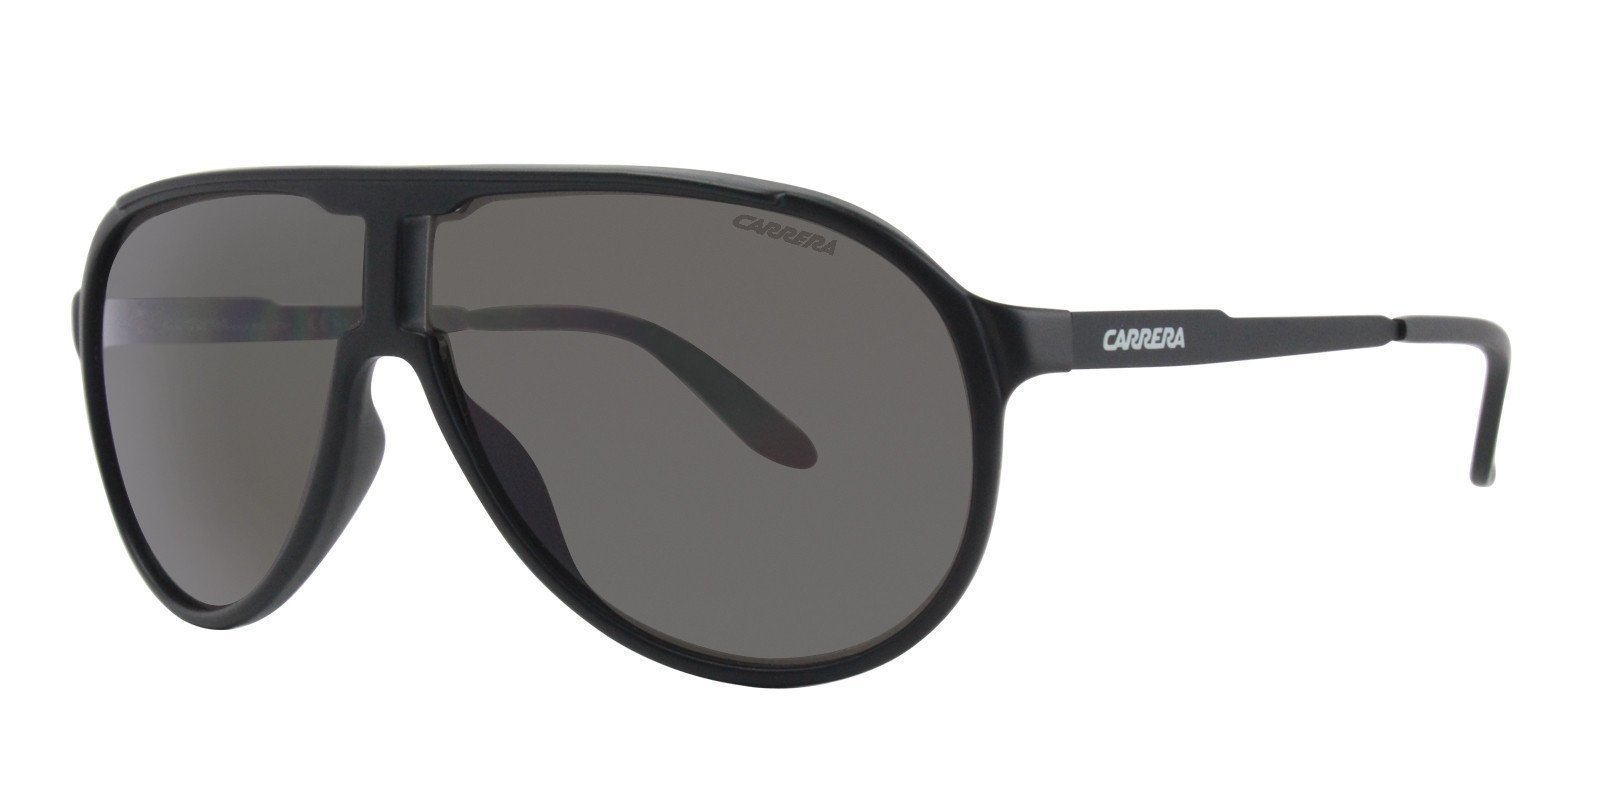 Wearing Carrera Champion Sunglasses - Designer Eyes